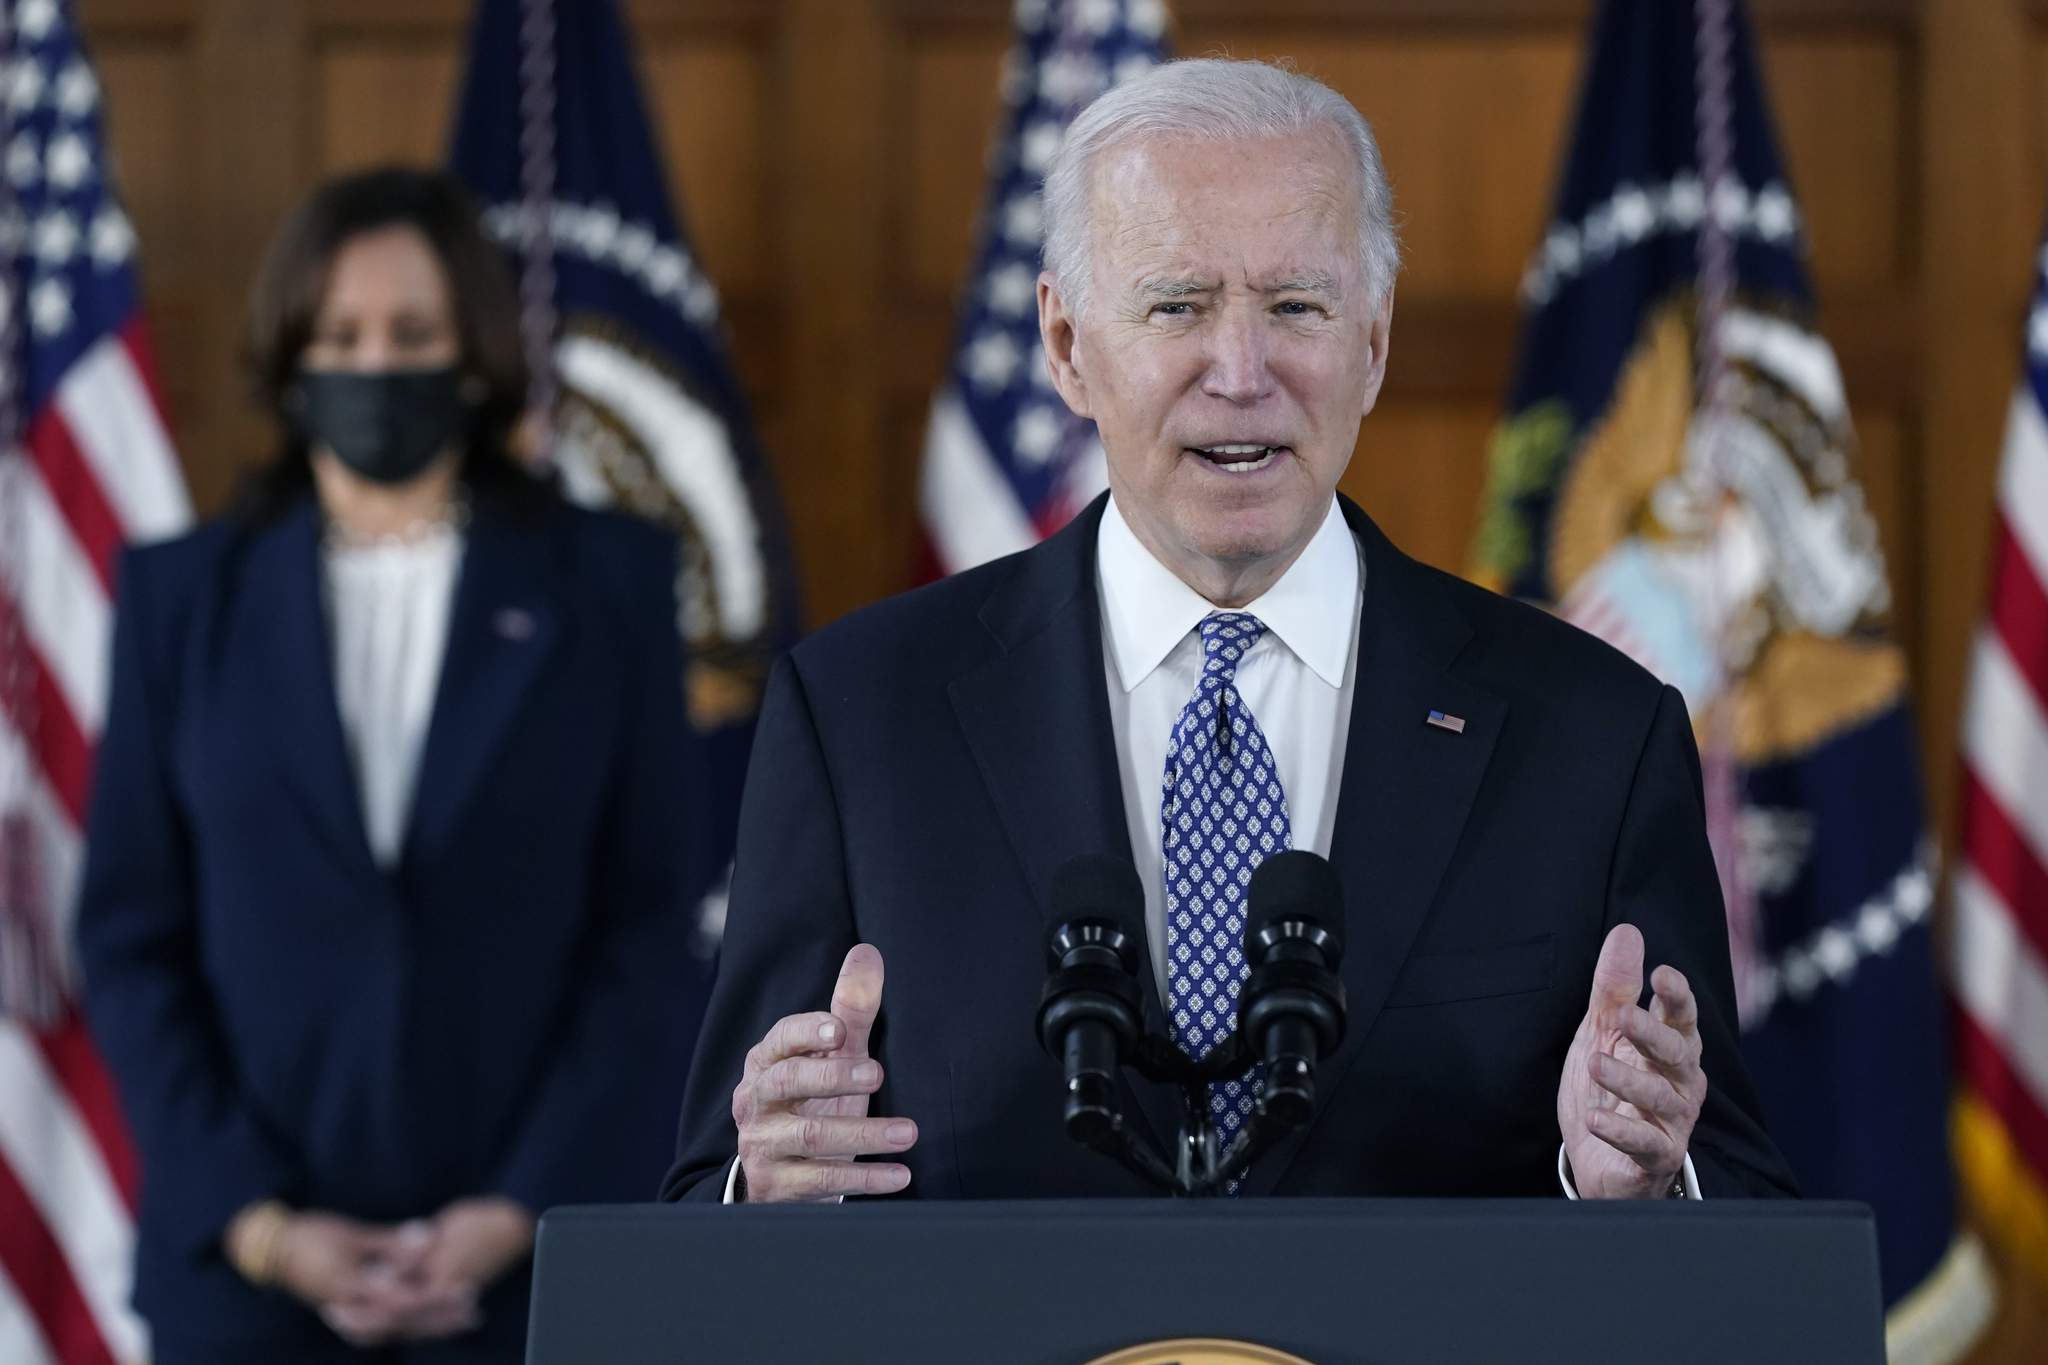 'Speak out:' Biden, Harris decry racism during Atlanta visit